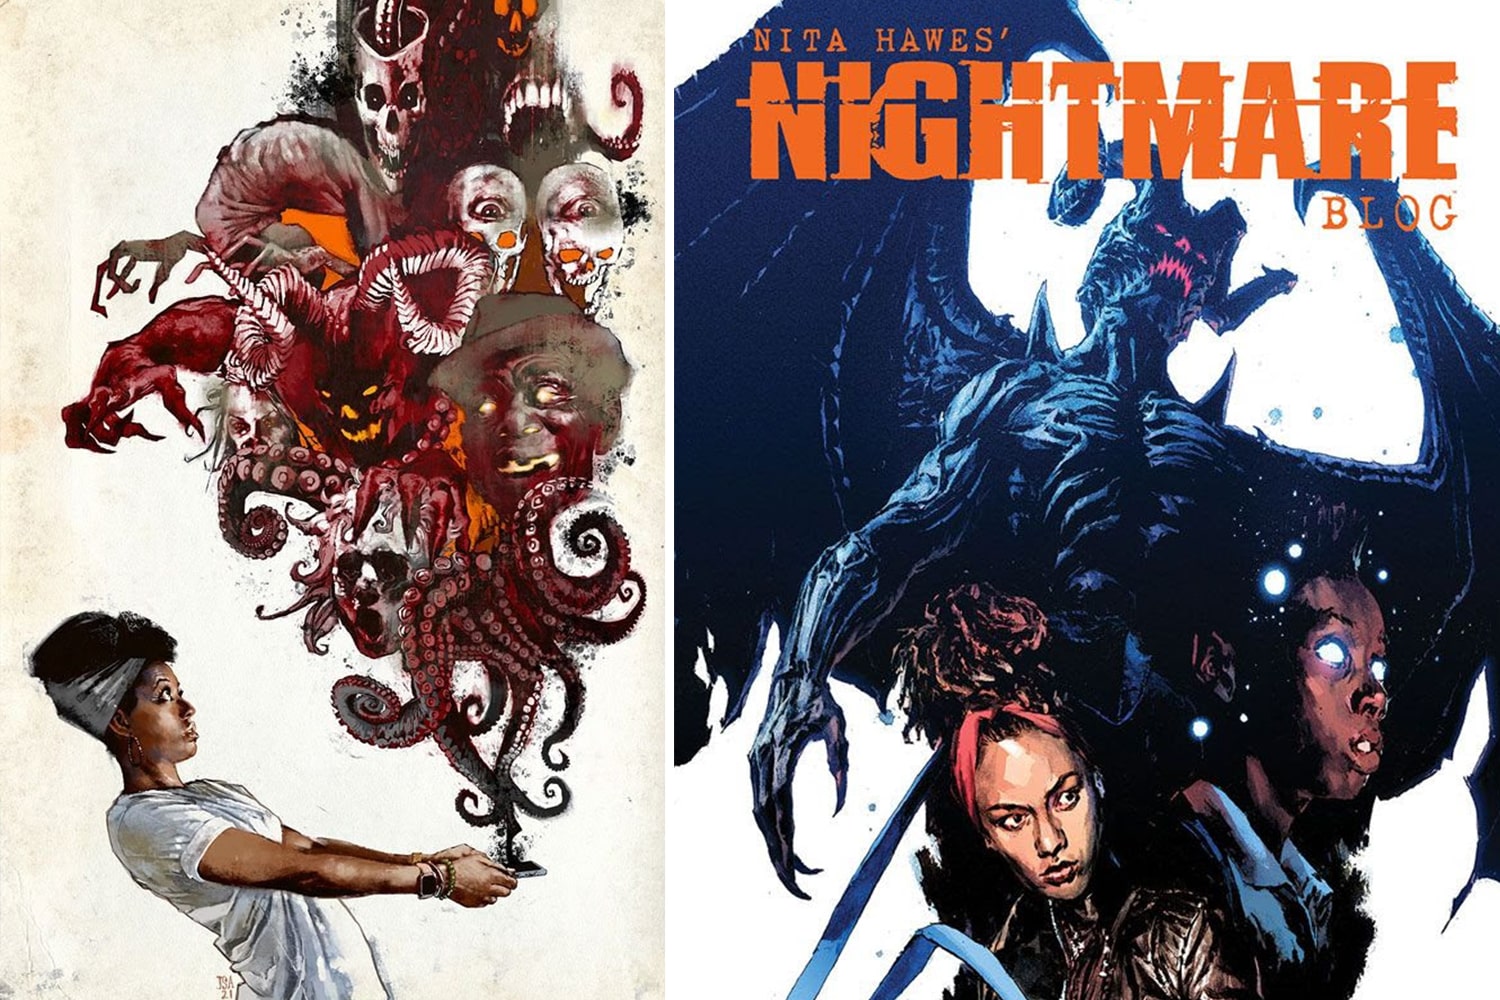 Image Comics First Look: Nita Hawes’ Nightmare Blog #1